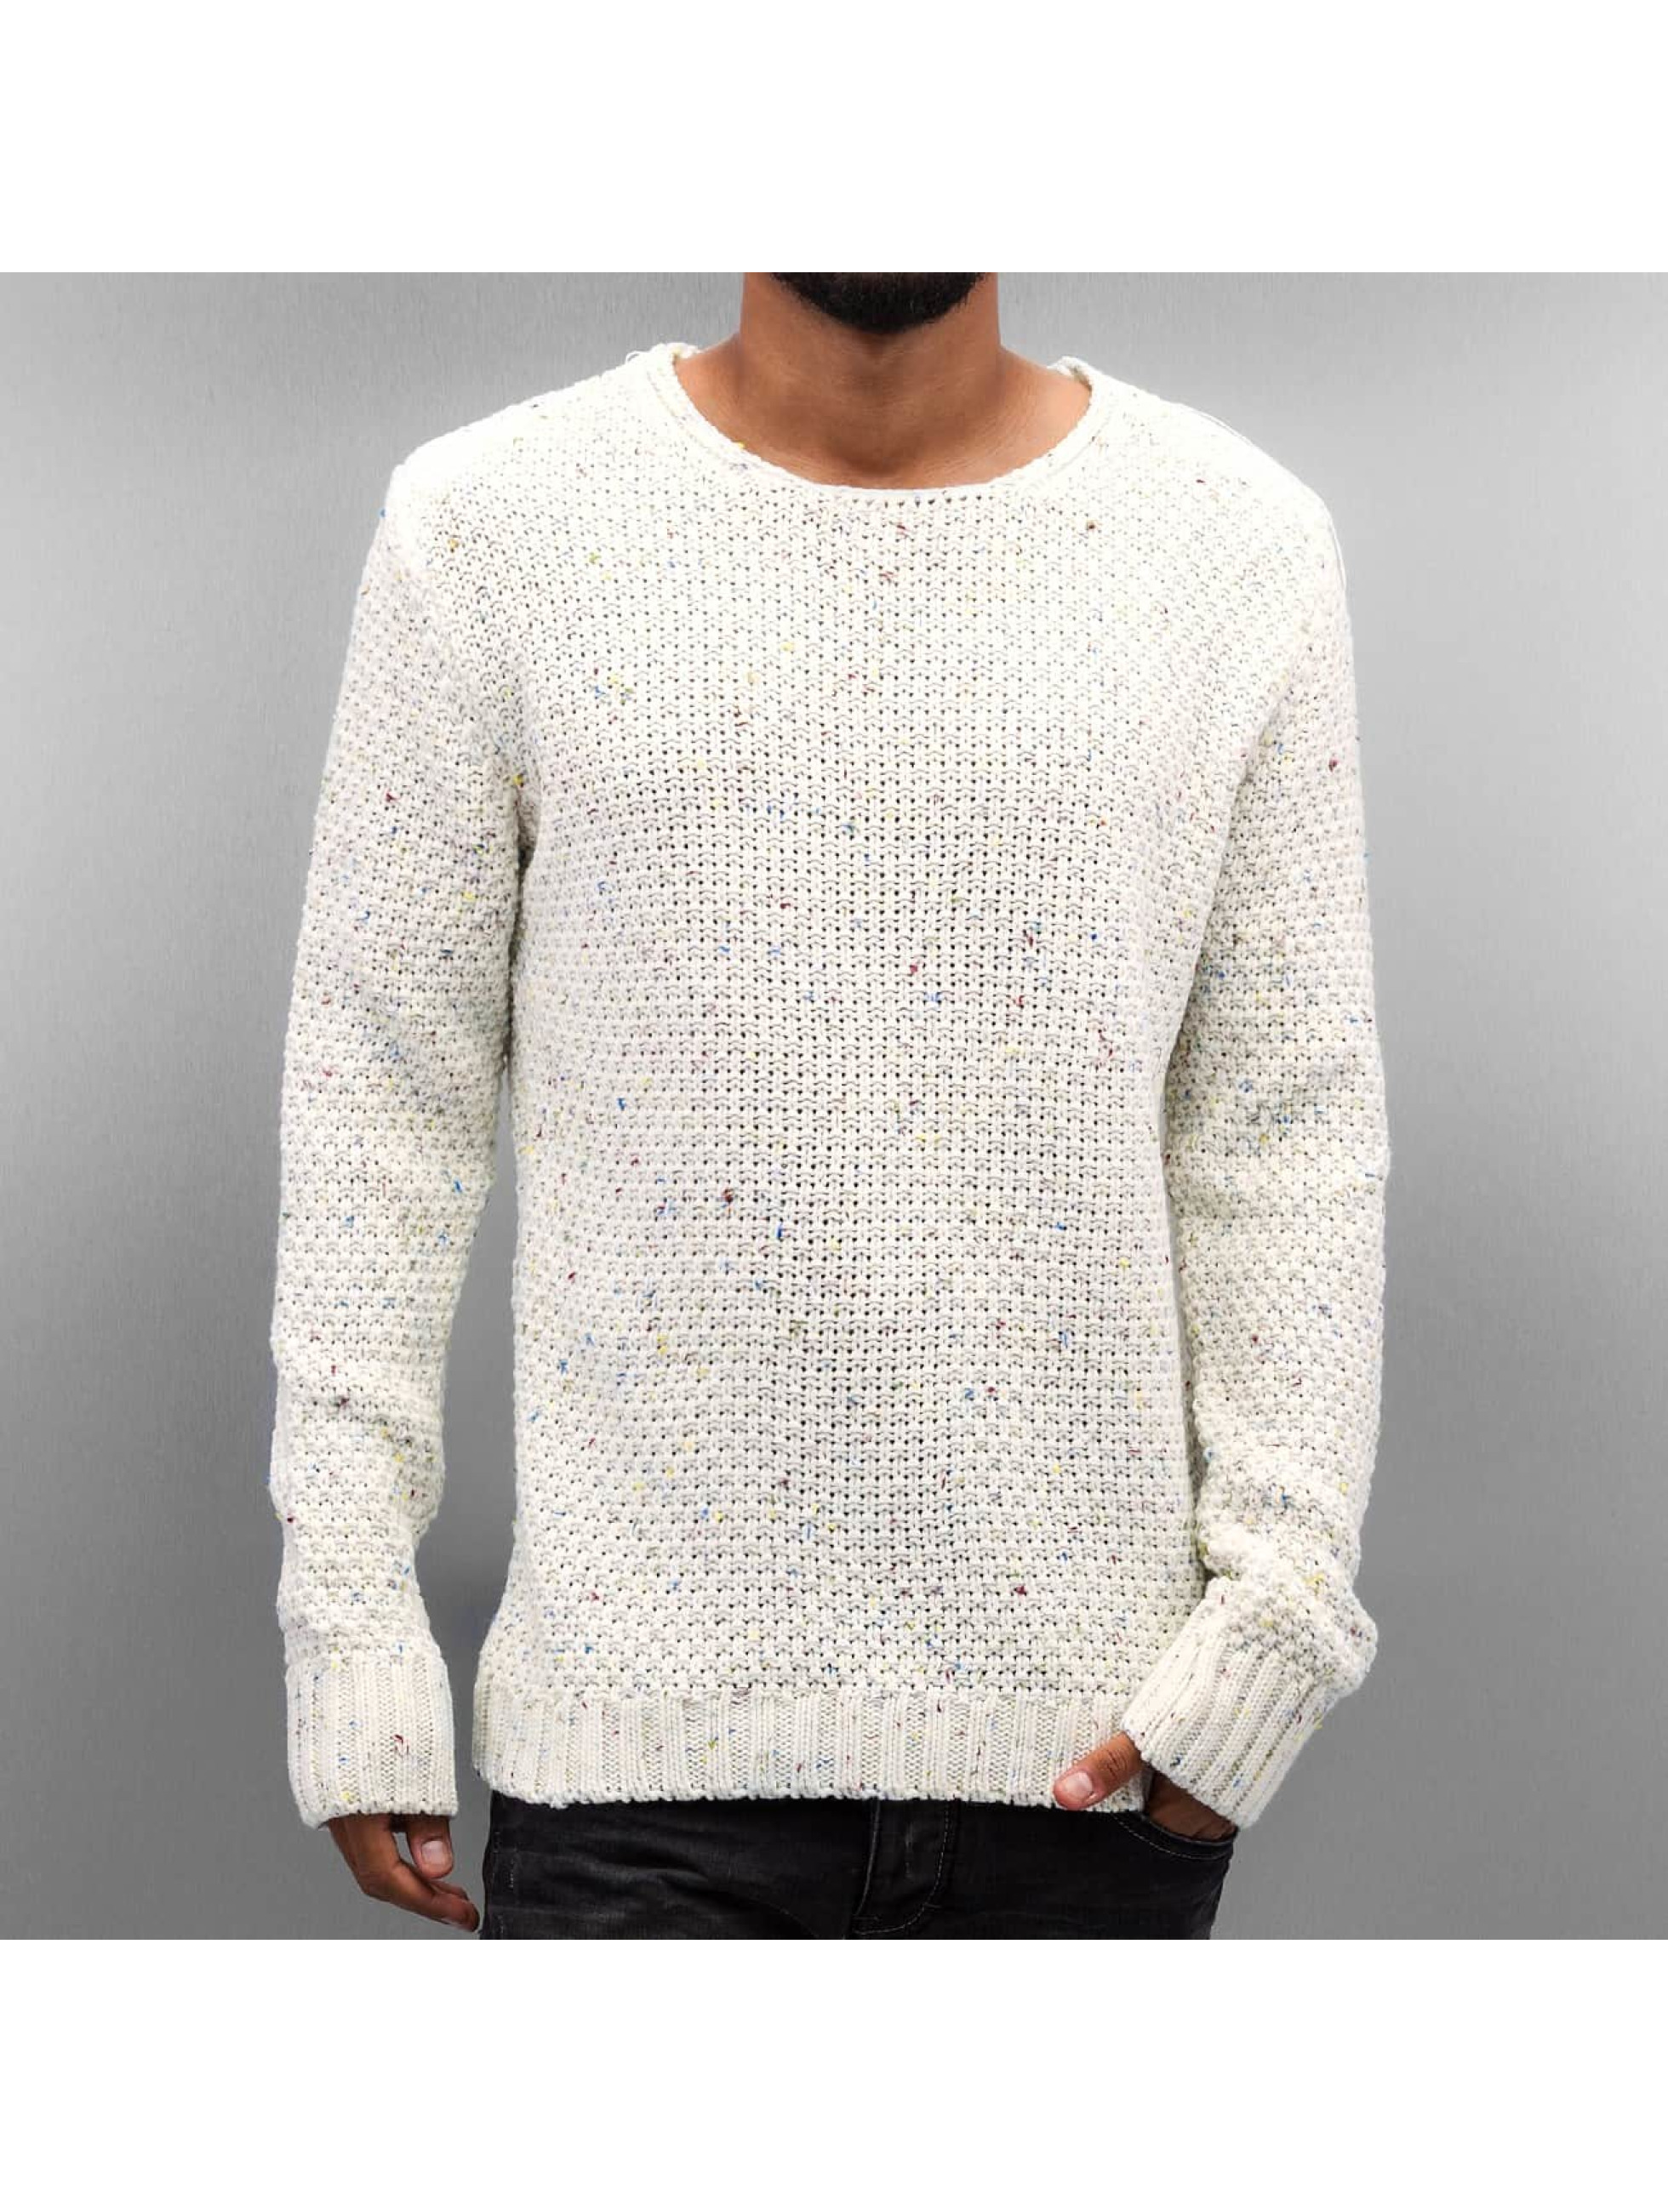 Pullover Soft Knit in weiß